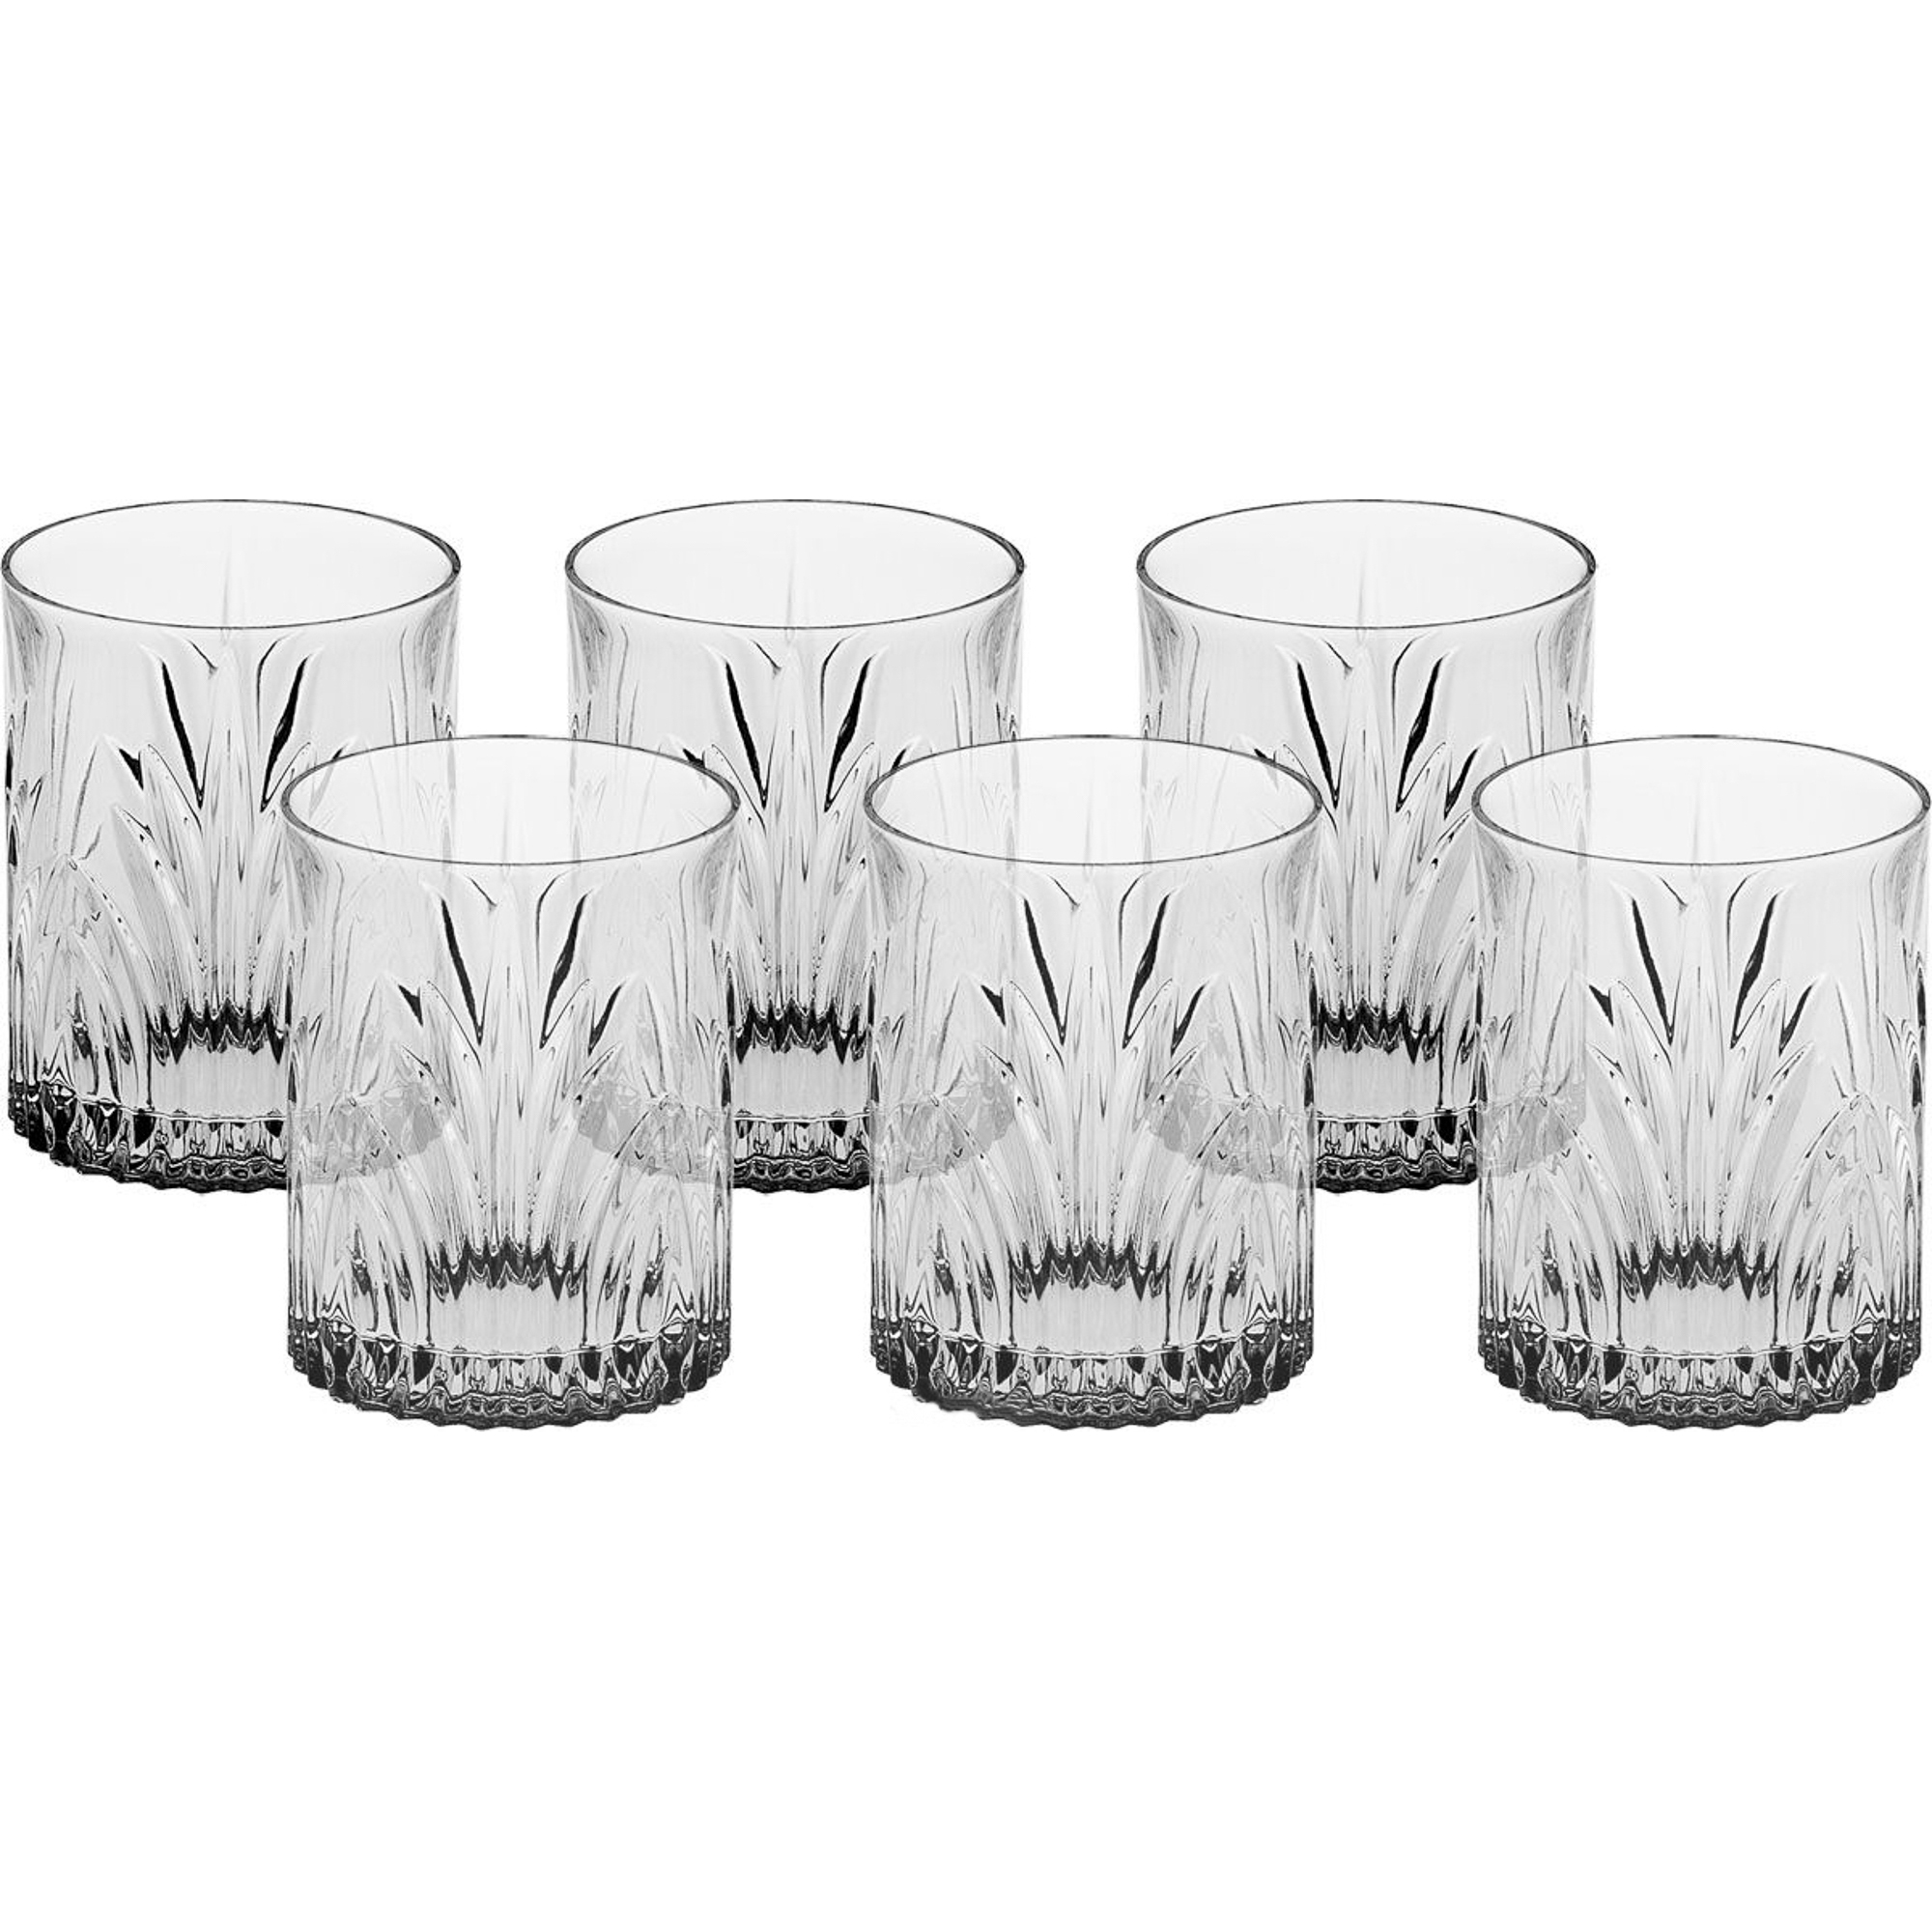 Набор стаканов для виски Crystal Bohemia Elise 320 мл 6 шт набор стаканов для виски crystal bohemia аngela 320мл 6шт 990 24600 0 42000 320 609